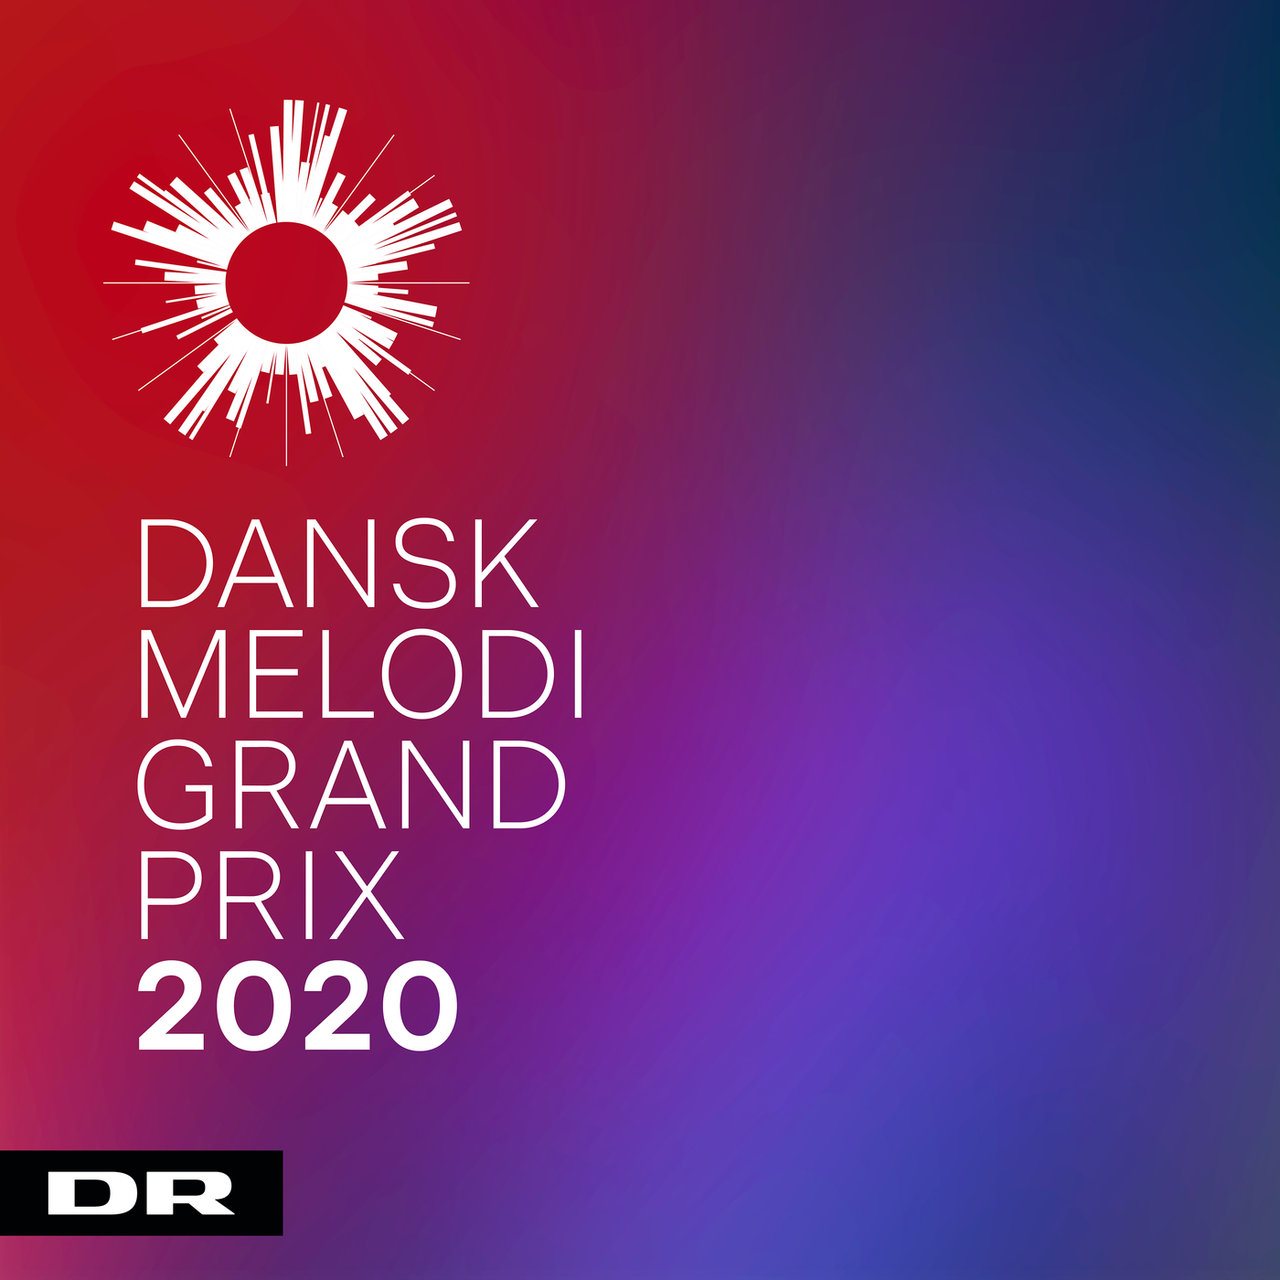 Denmark 🇩🇰 in the Eurovision Song Contest Dansk Melodi Grand Prix 2020 cover artwork